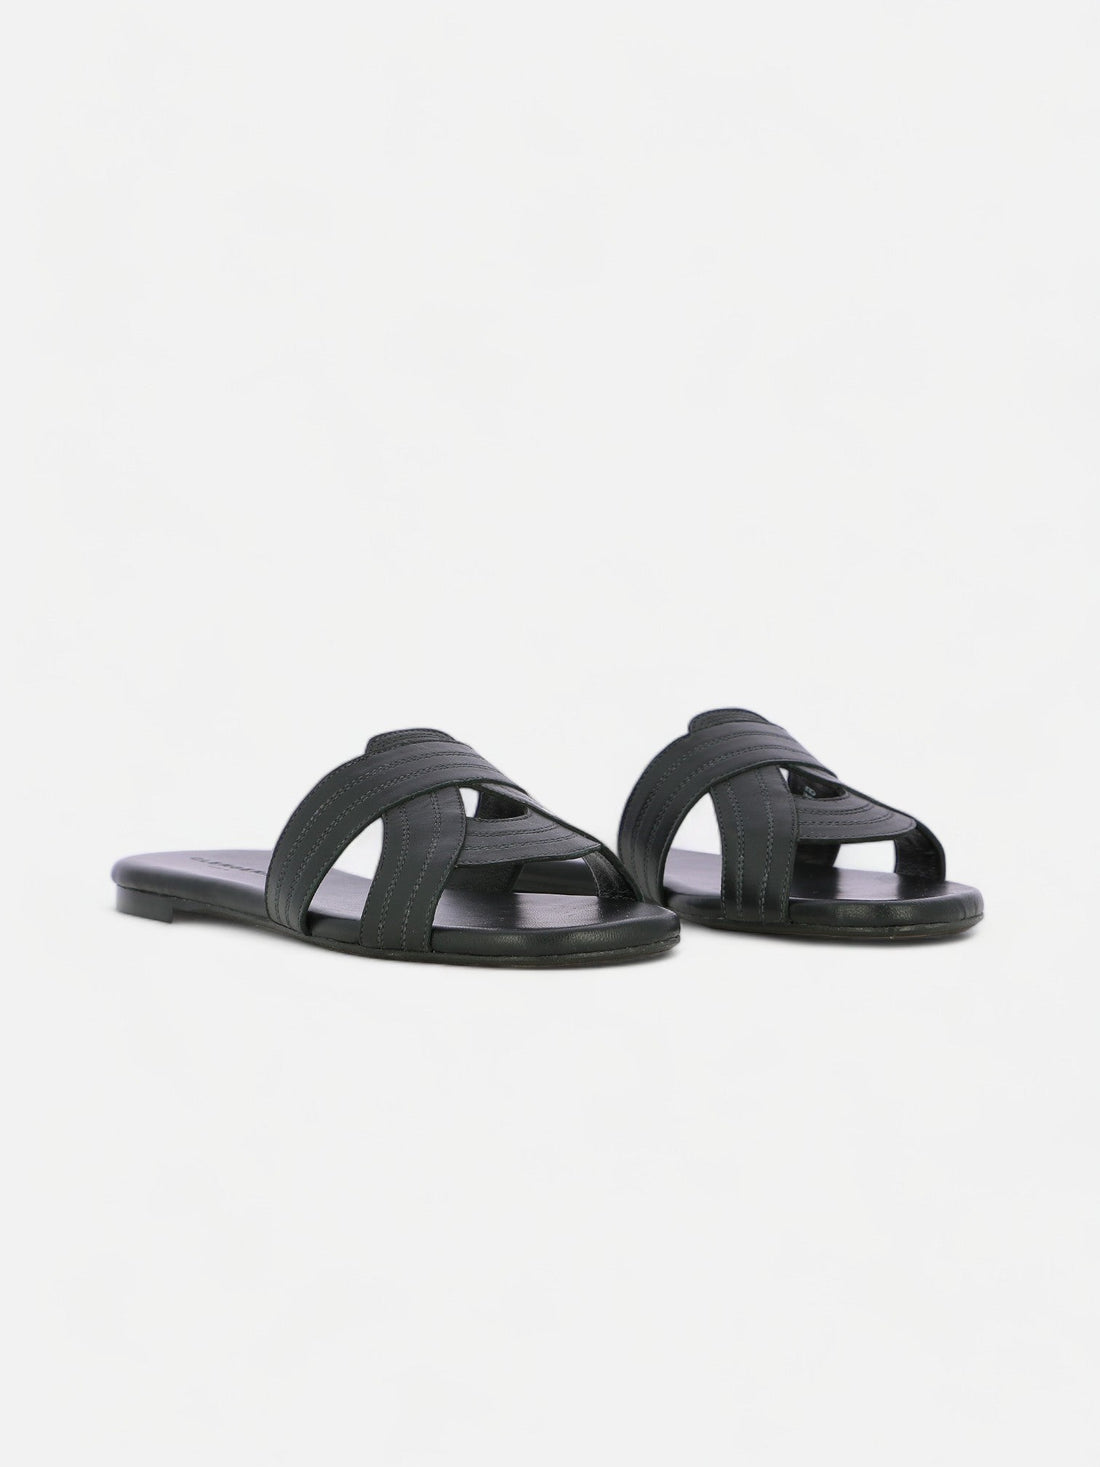 SANDALS - IVORY sandals, calfskin black - 3606063995733 - Clergerie Paris - Europe